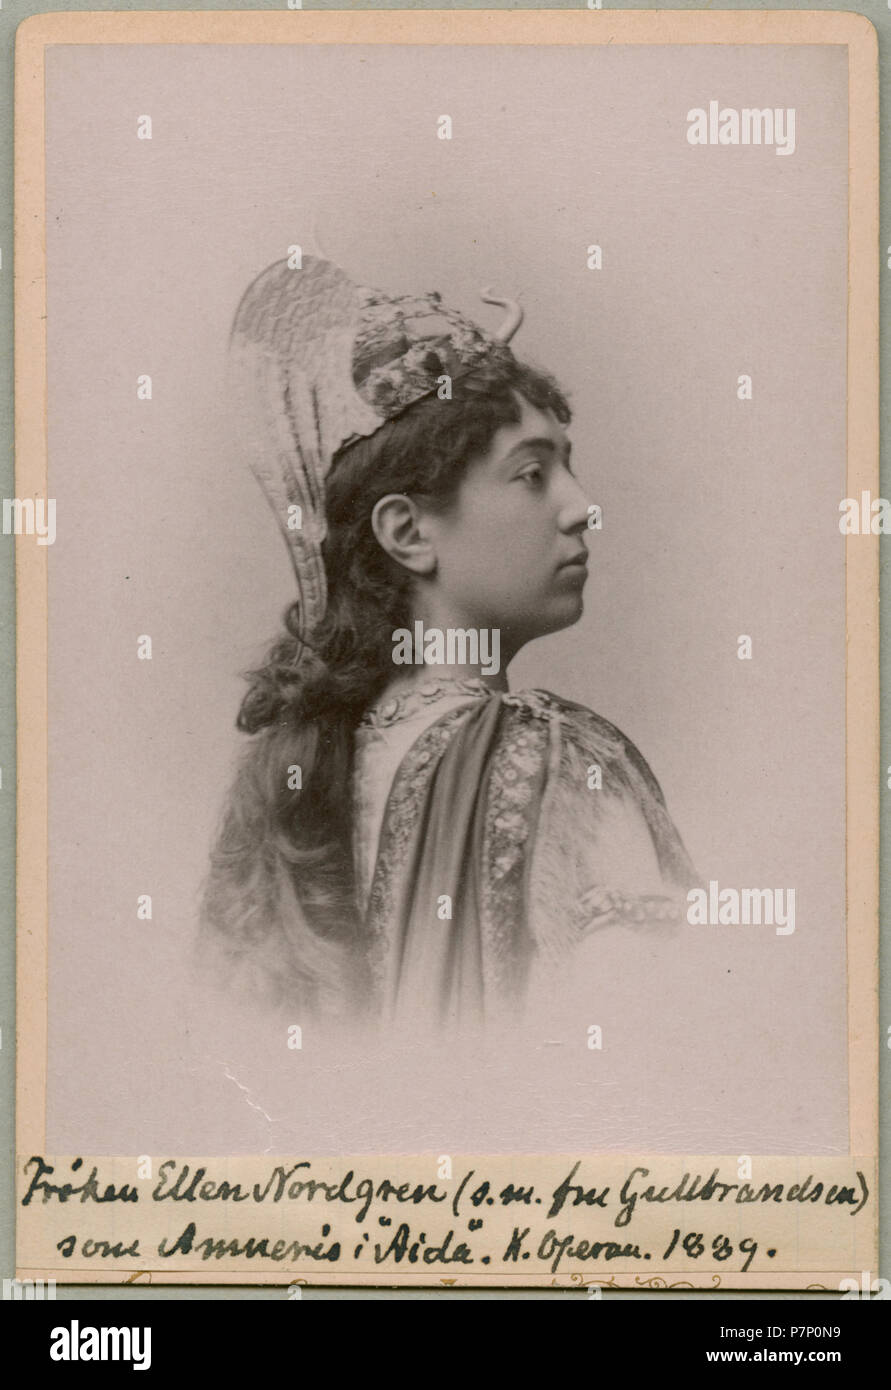 Ellen Nordgren (sedemera Gulbranson) som Amneris i Aida, Kungliga Operan 1889 144 Ellen Nordgren, rollporträtt - SMV - H6 129 Stock Photo